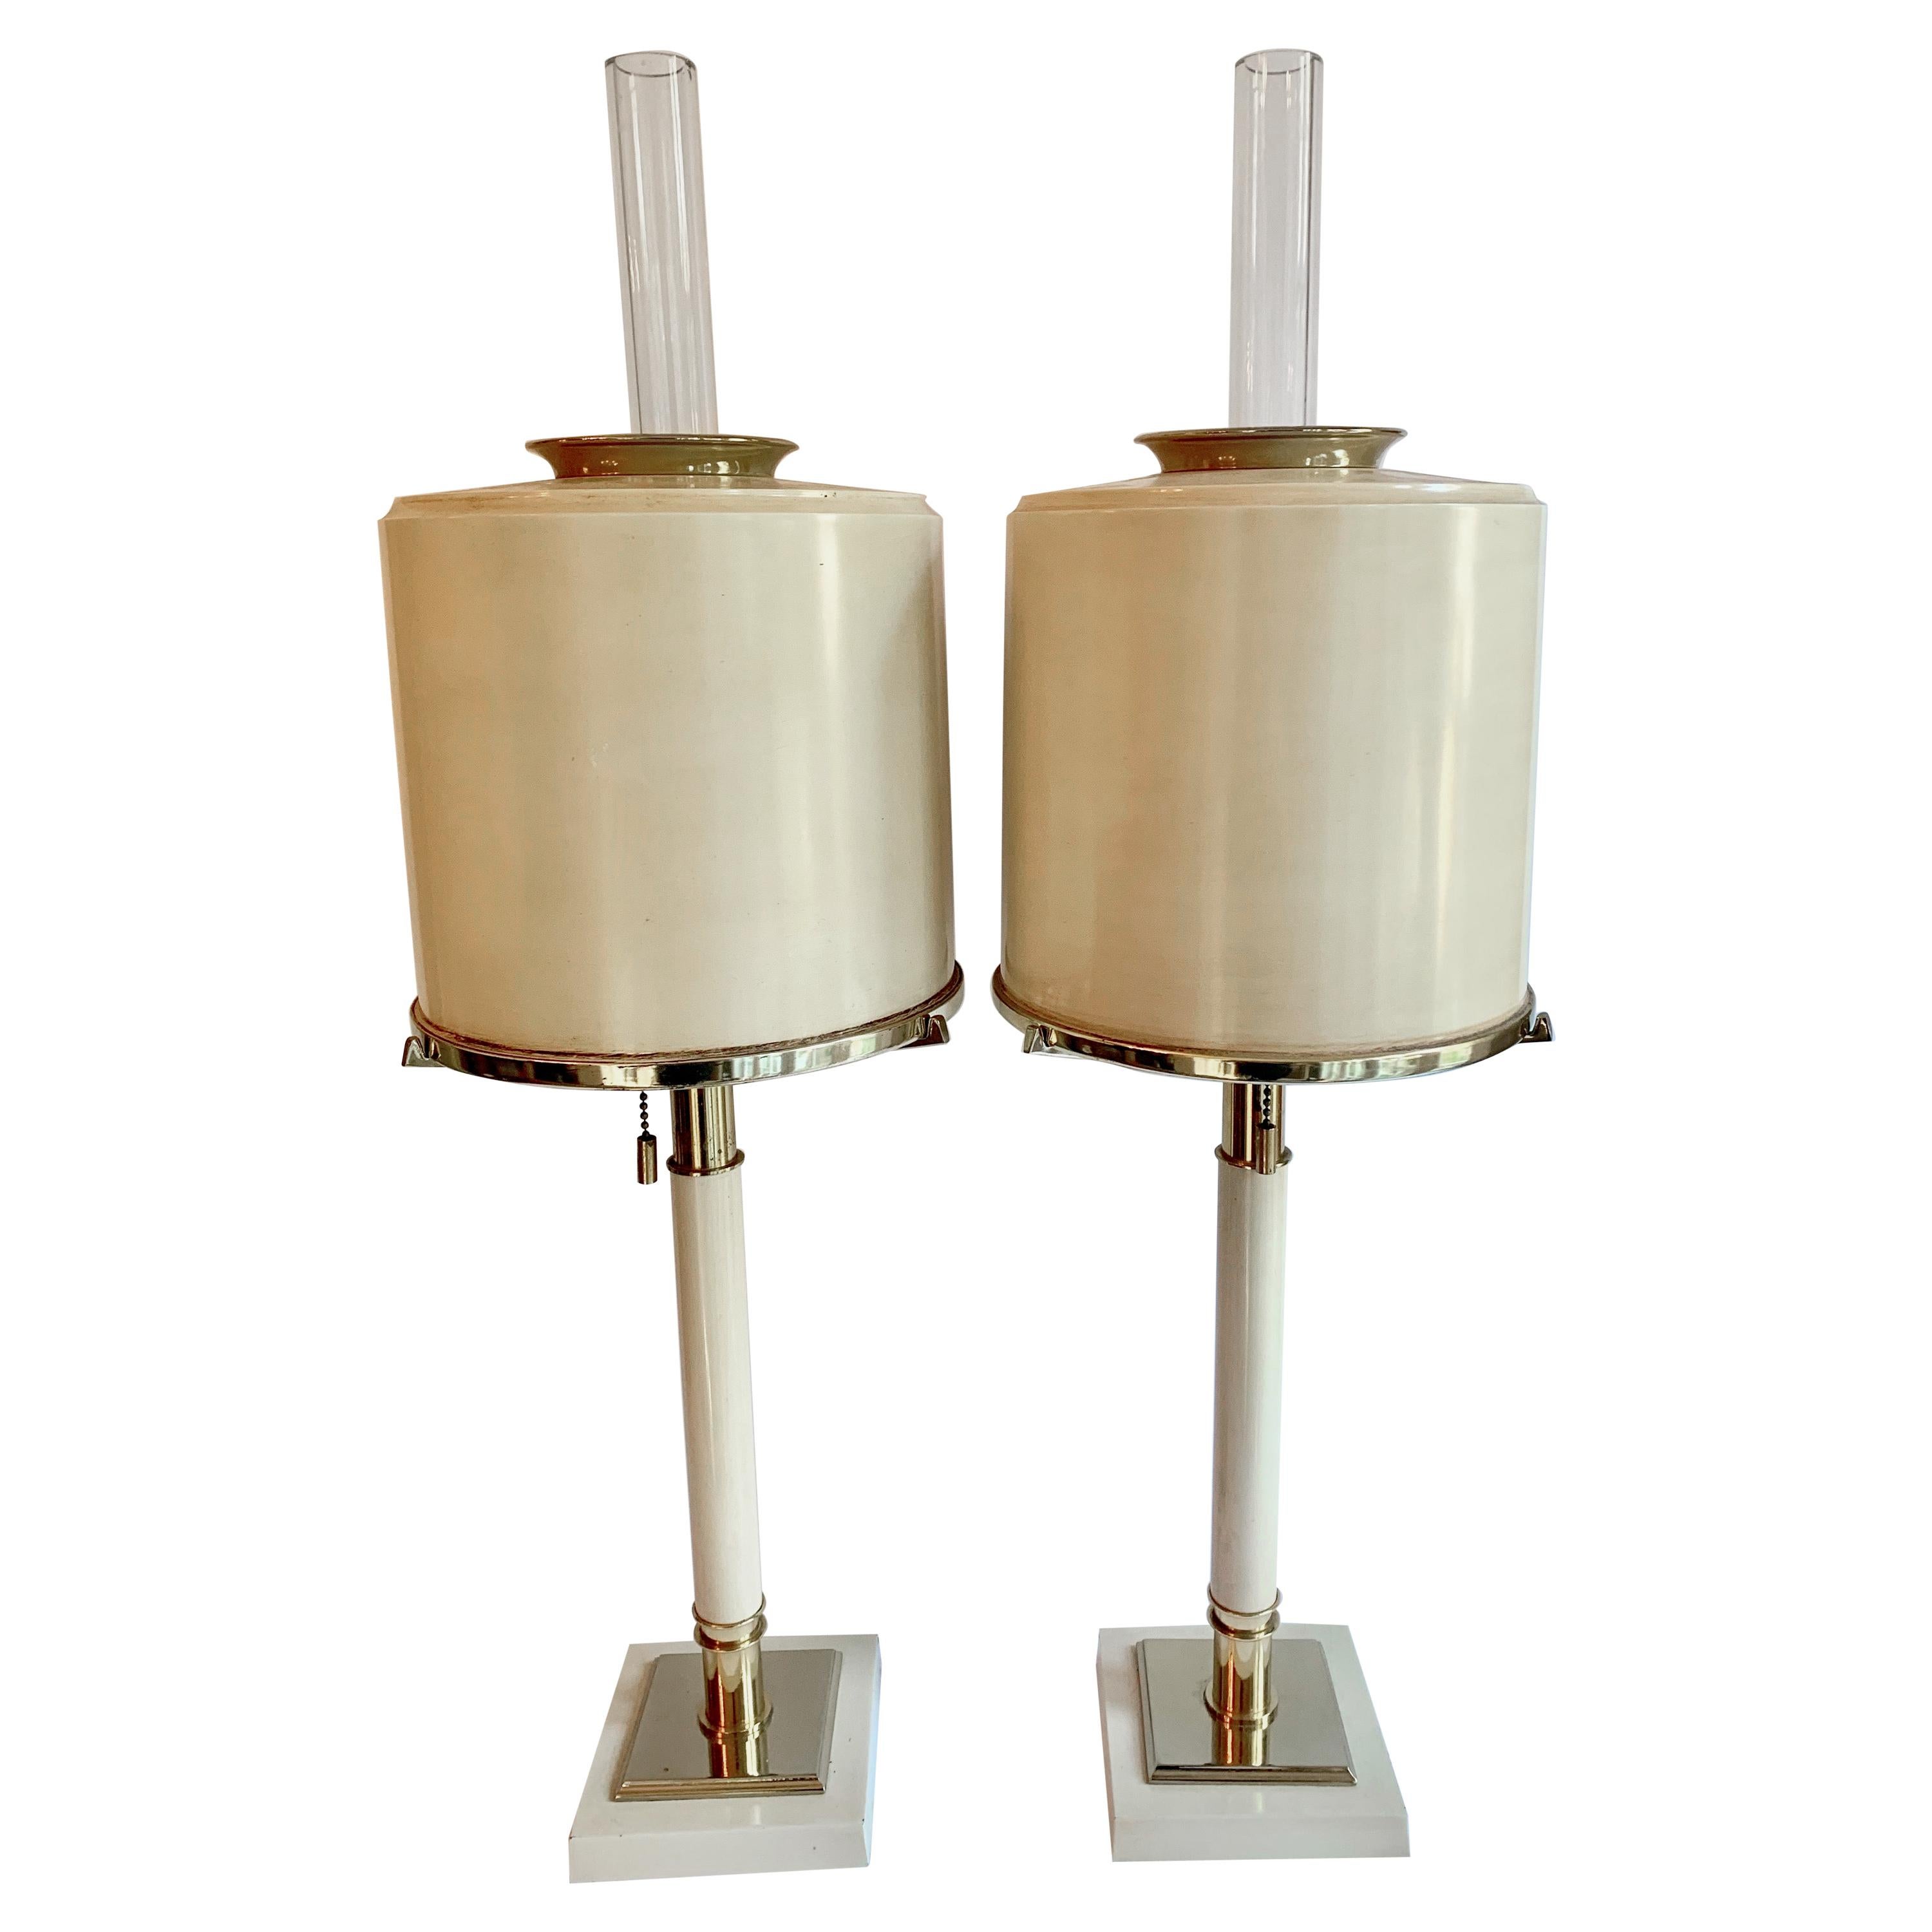 Pair of Laurel Lamps in Cream Metal with Brass Detailing